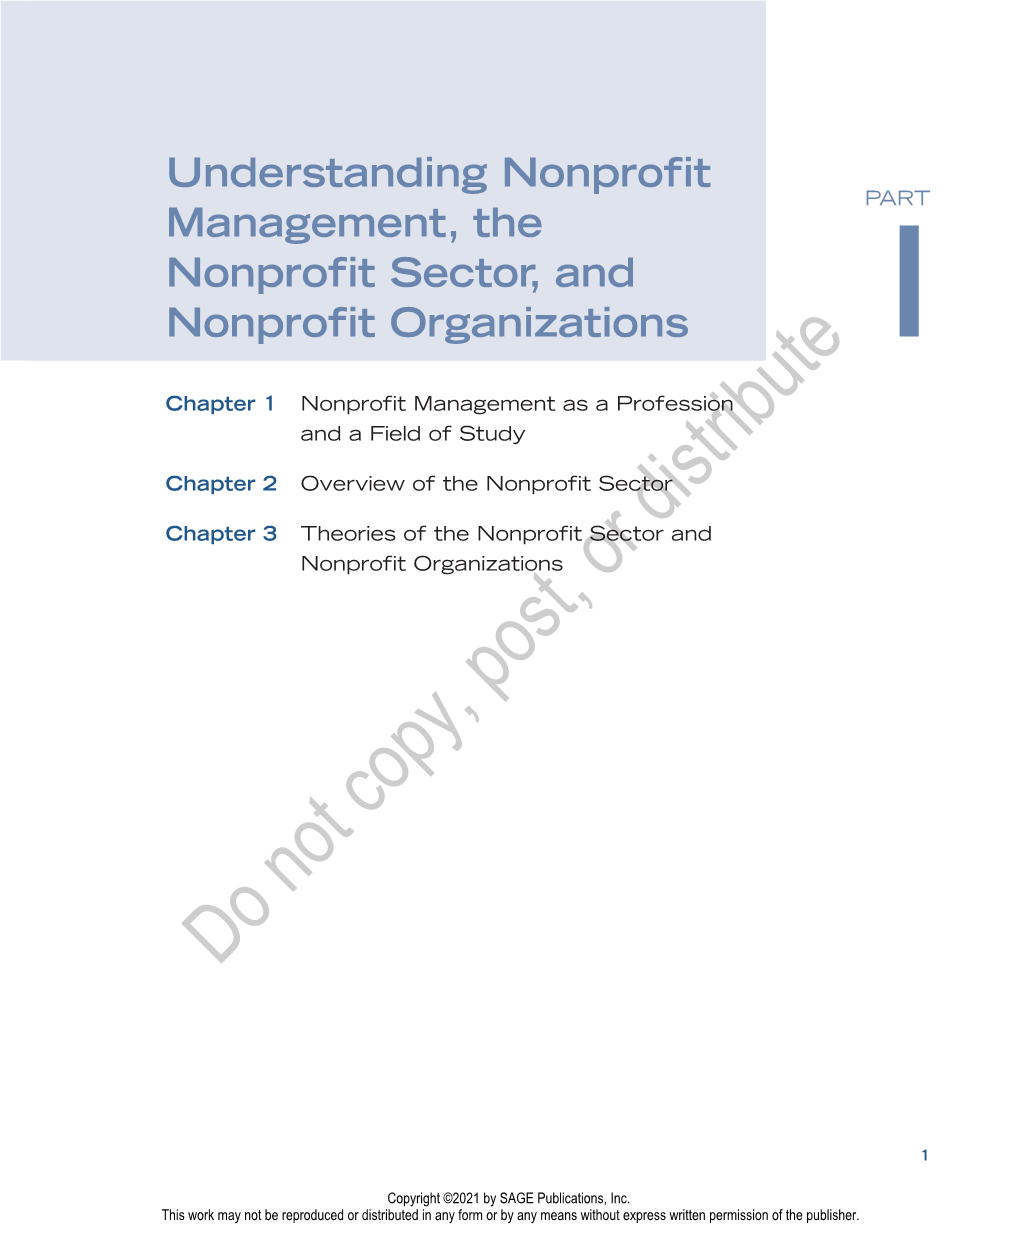 Understanding Nonprofit Management, the Nonprofit Sector, and Nonprofit Organizations